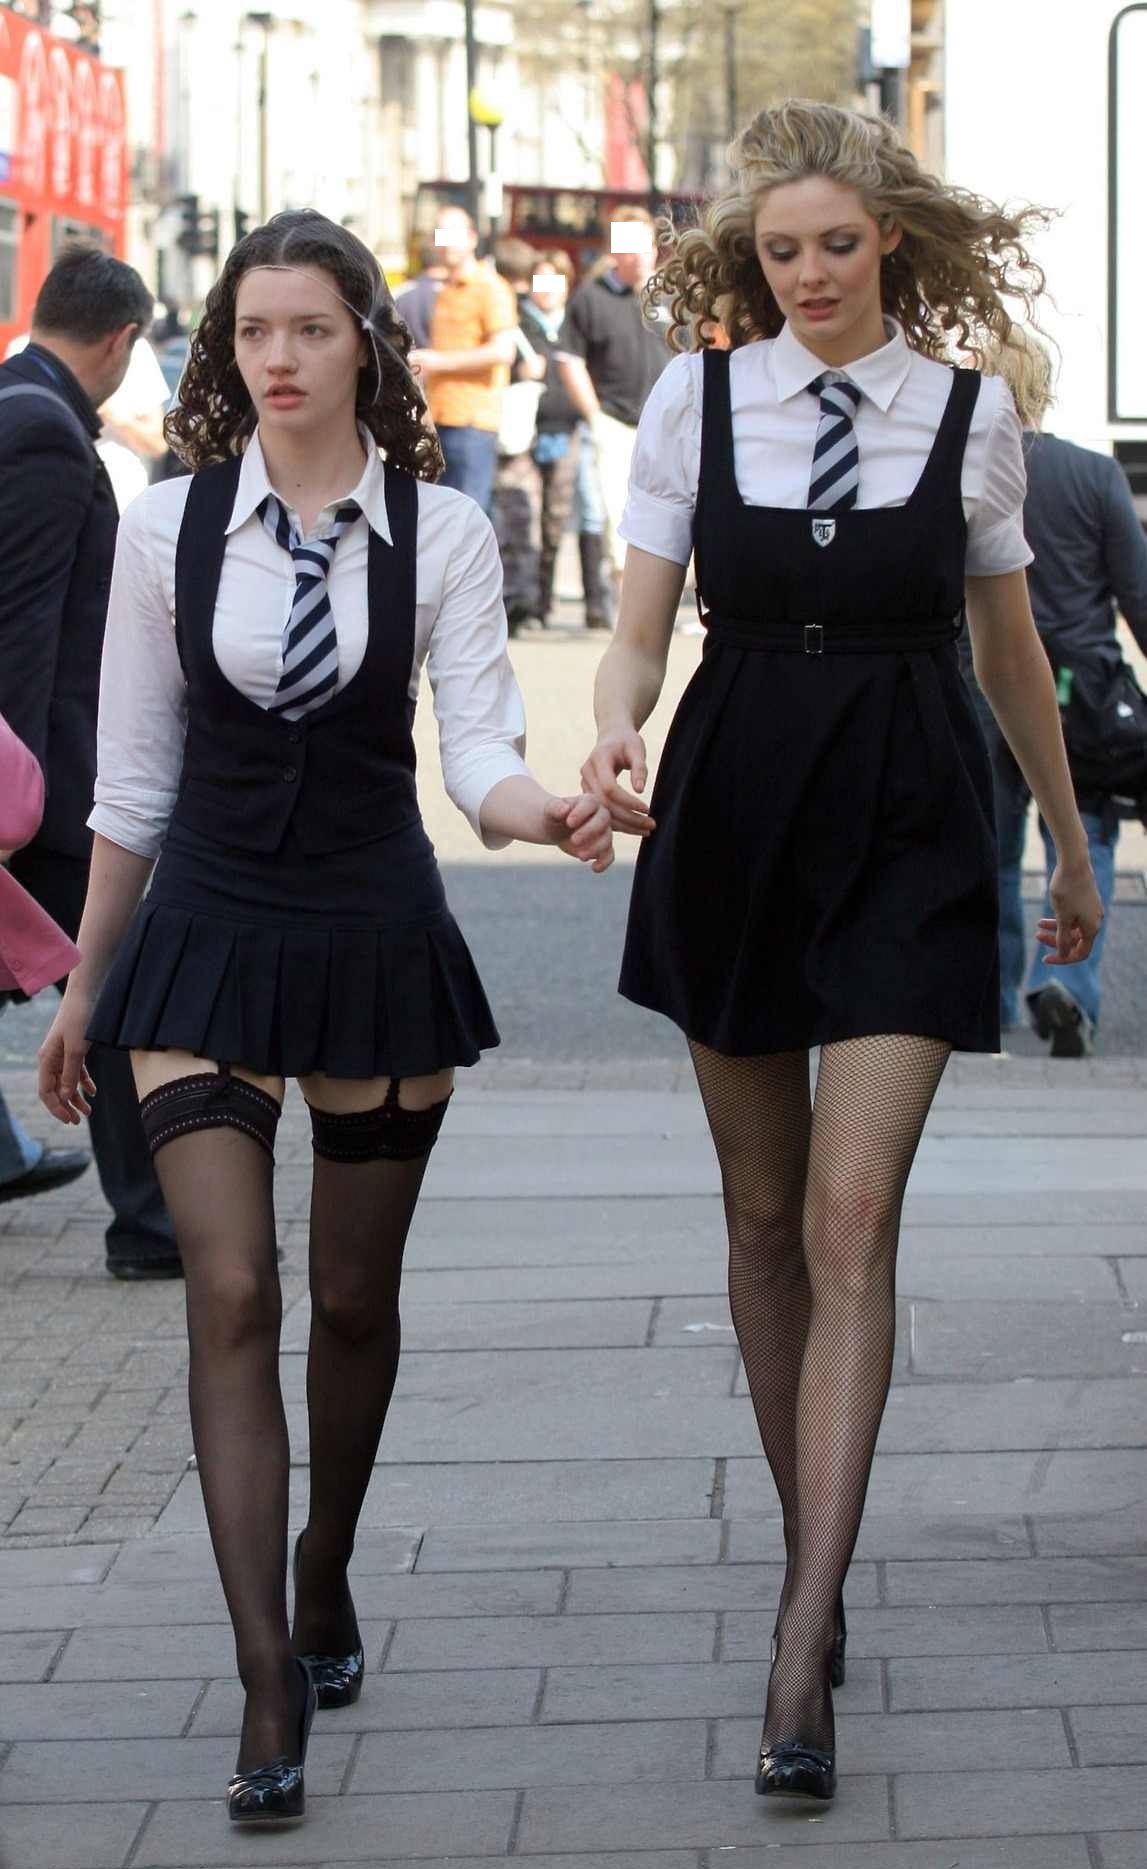 Two Schoolgirls wearing Black Sheer and Fishnet Stockings and Black High Heels